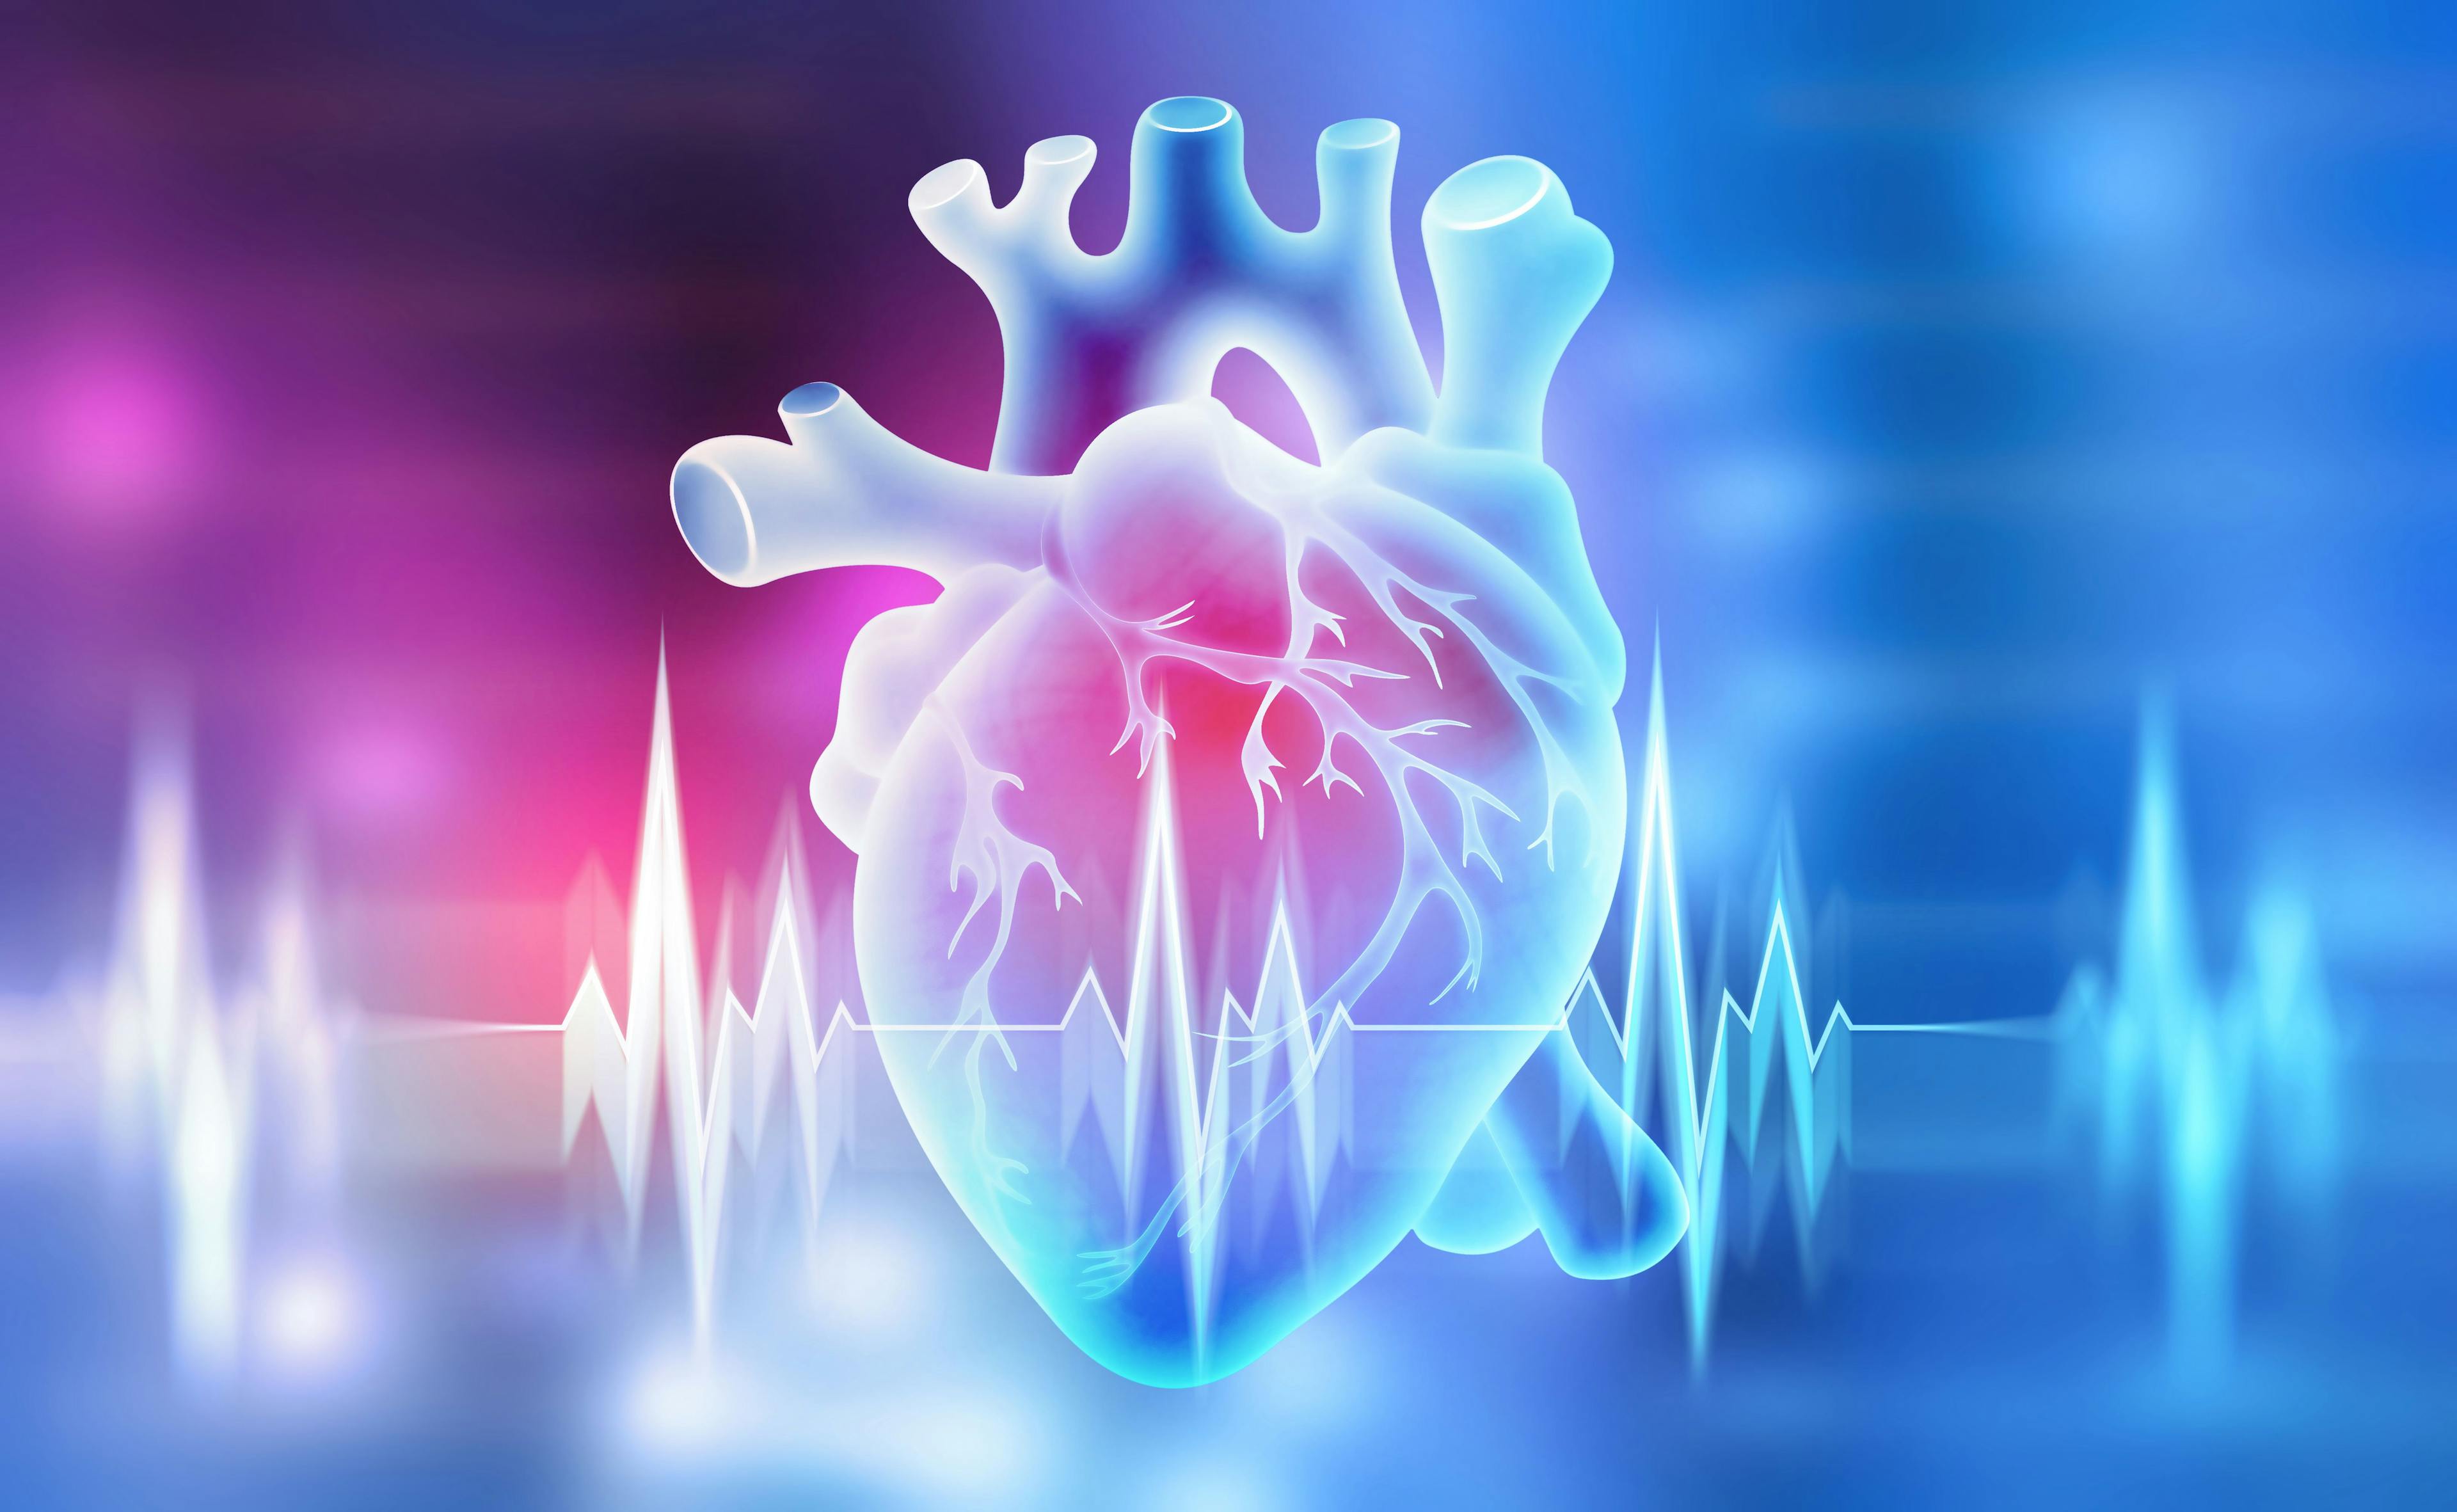 3D illustration of heart | Image Credit: Siarhei - stock.adobe.com